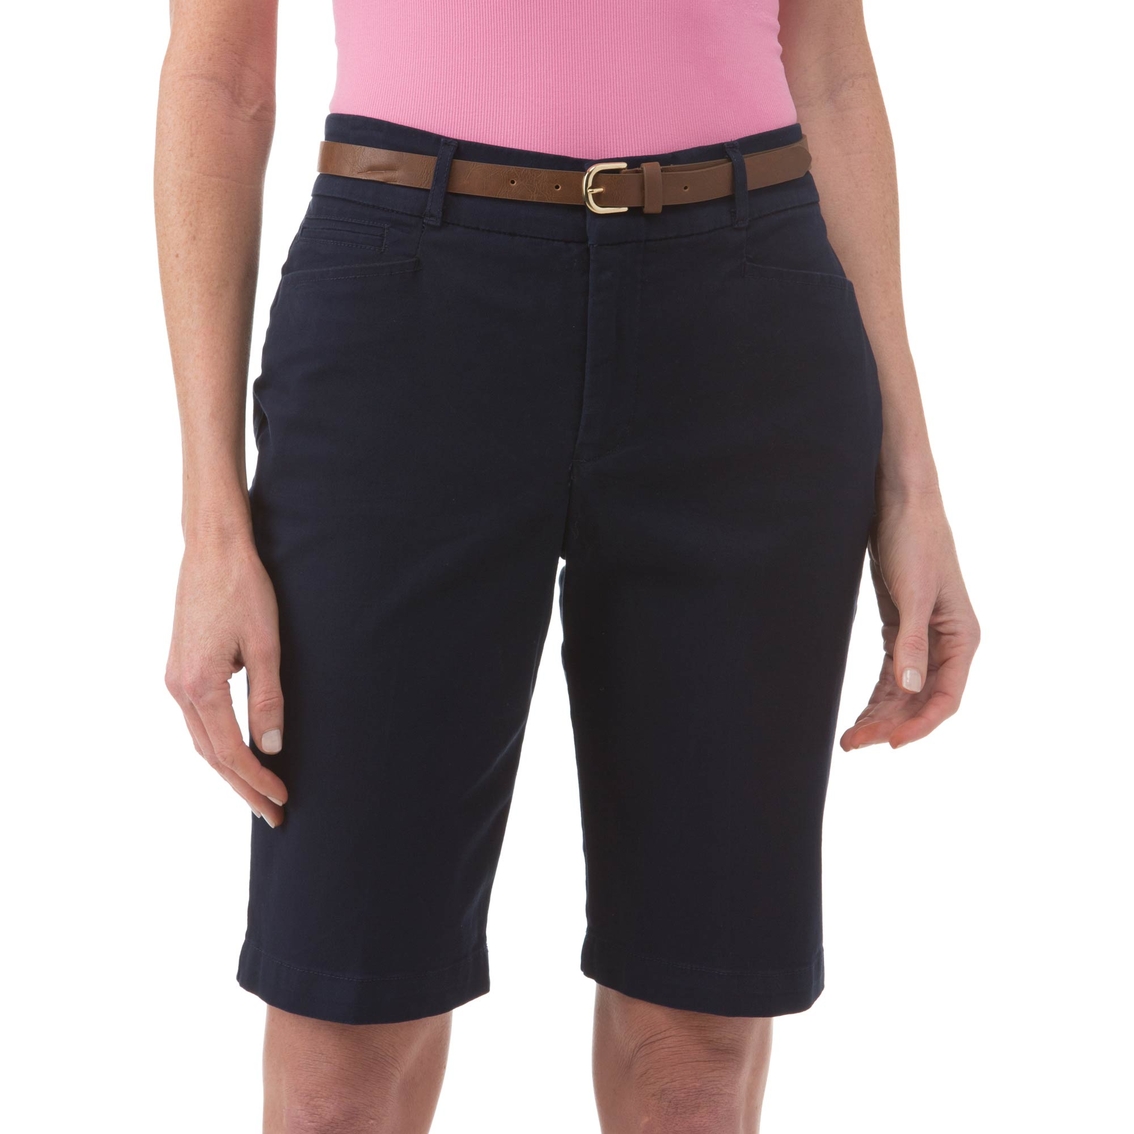 Gloria Vanderbilt Charlene Belt City Shorts | Shorts | Clothing ...